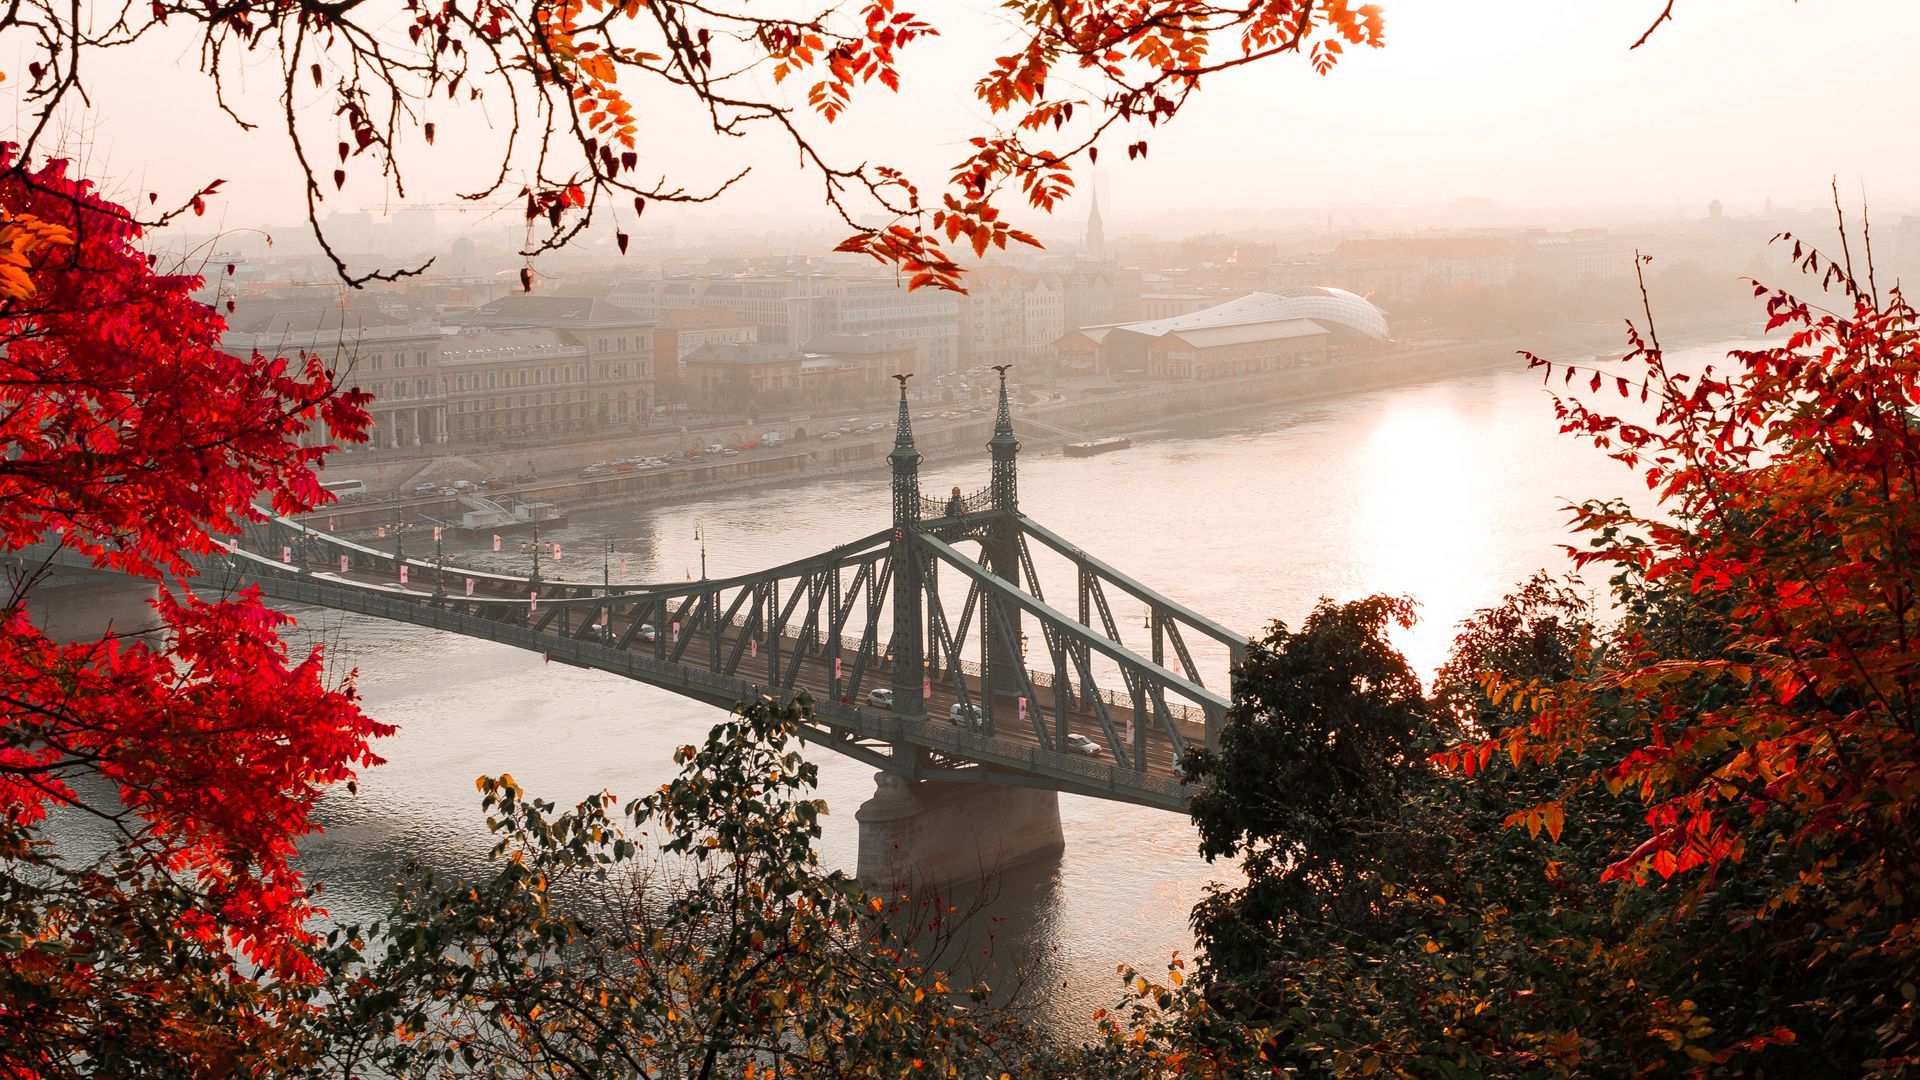 Download wallpaper 1920x1080 bridge, autumn, city, citadella, budapest, hungary full hd, hdtv, fhd, 1080p HD background